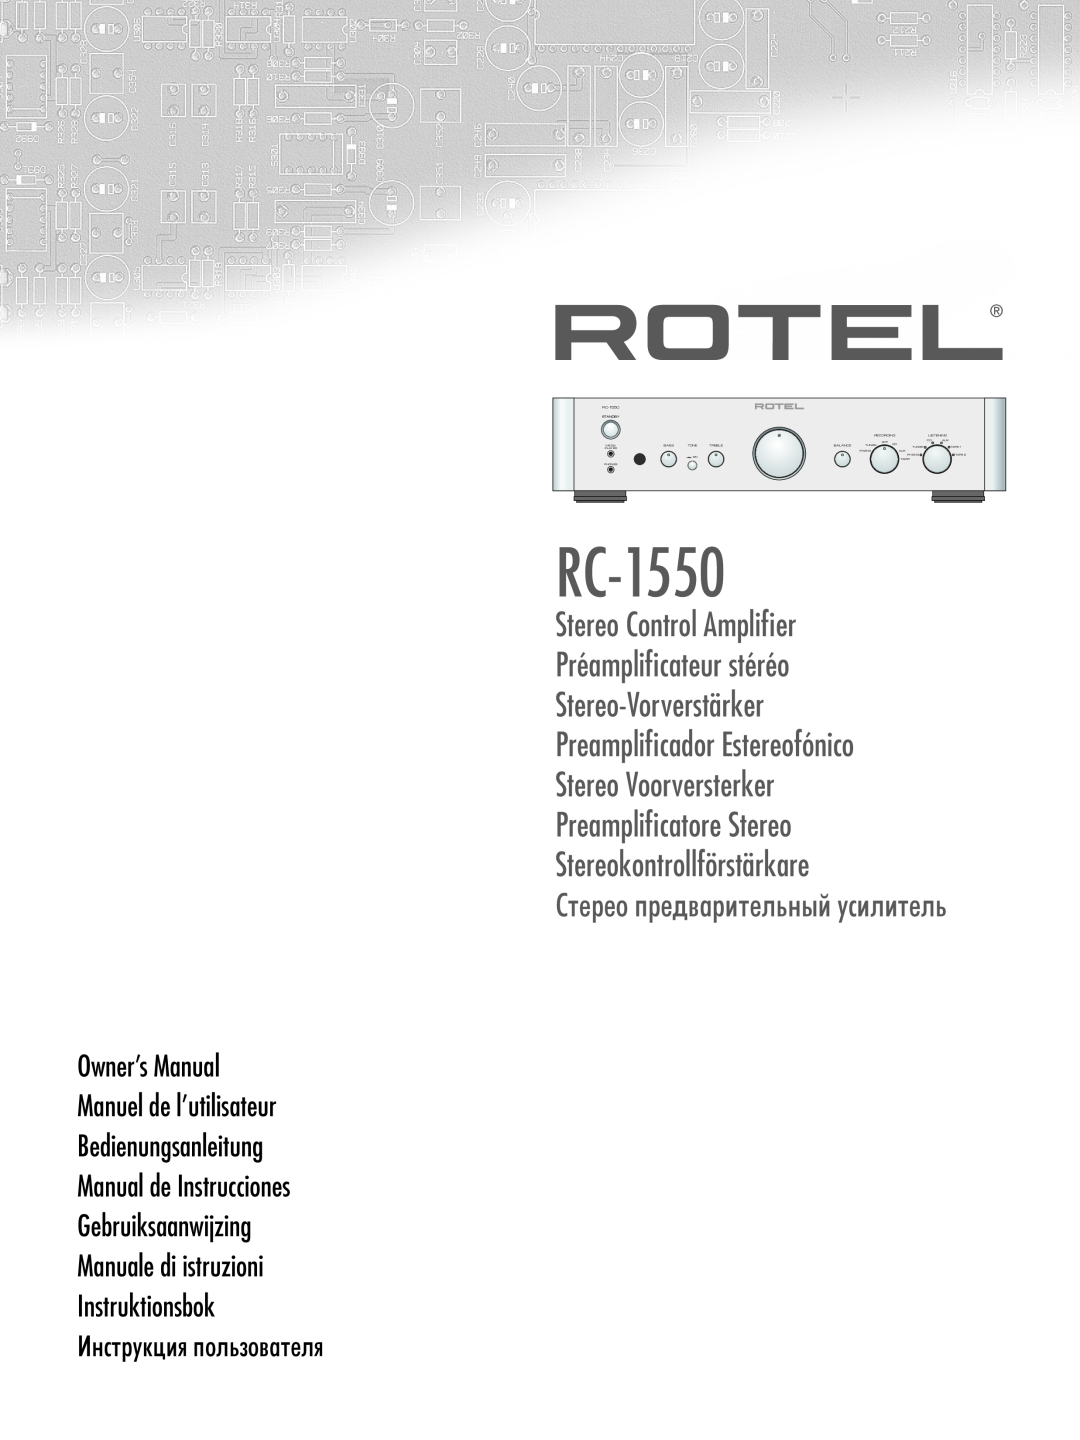 Rotel RC-1550 owner manual Stereo Control Amplifier Préamplificateur stéréo, Stereo-Vorverstärker, Standby 